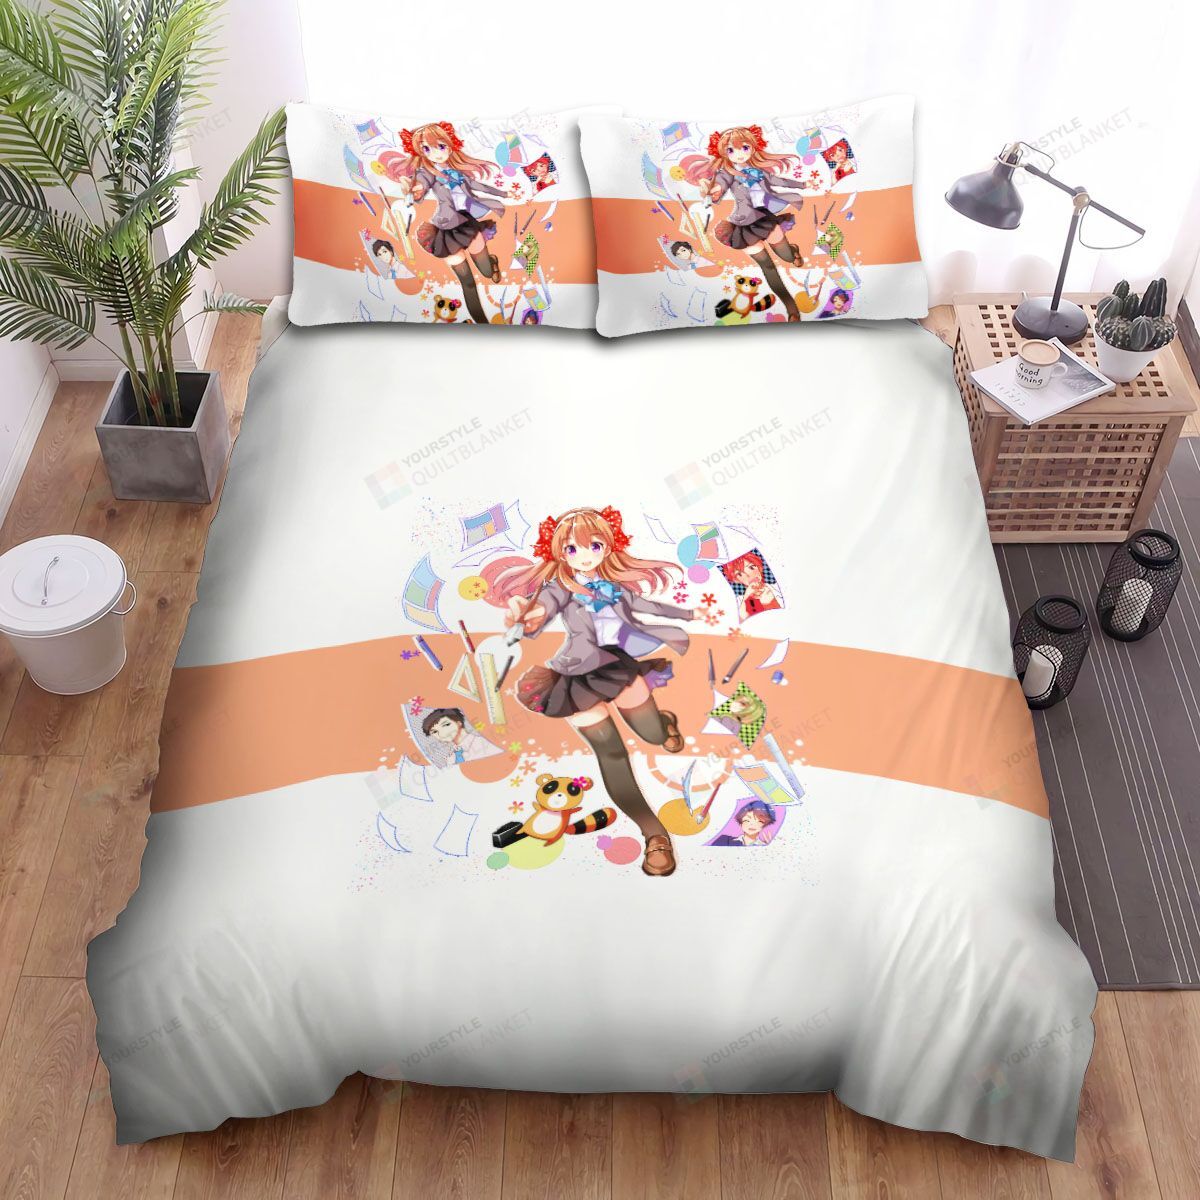 Monthly Girls' Nozaki-Kun Chiyo Sakura Drawing Bed Sheets Spread Comforter Duvet Cover Bedding Sets